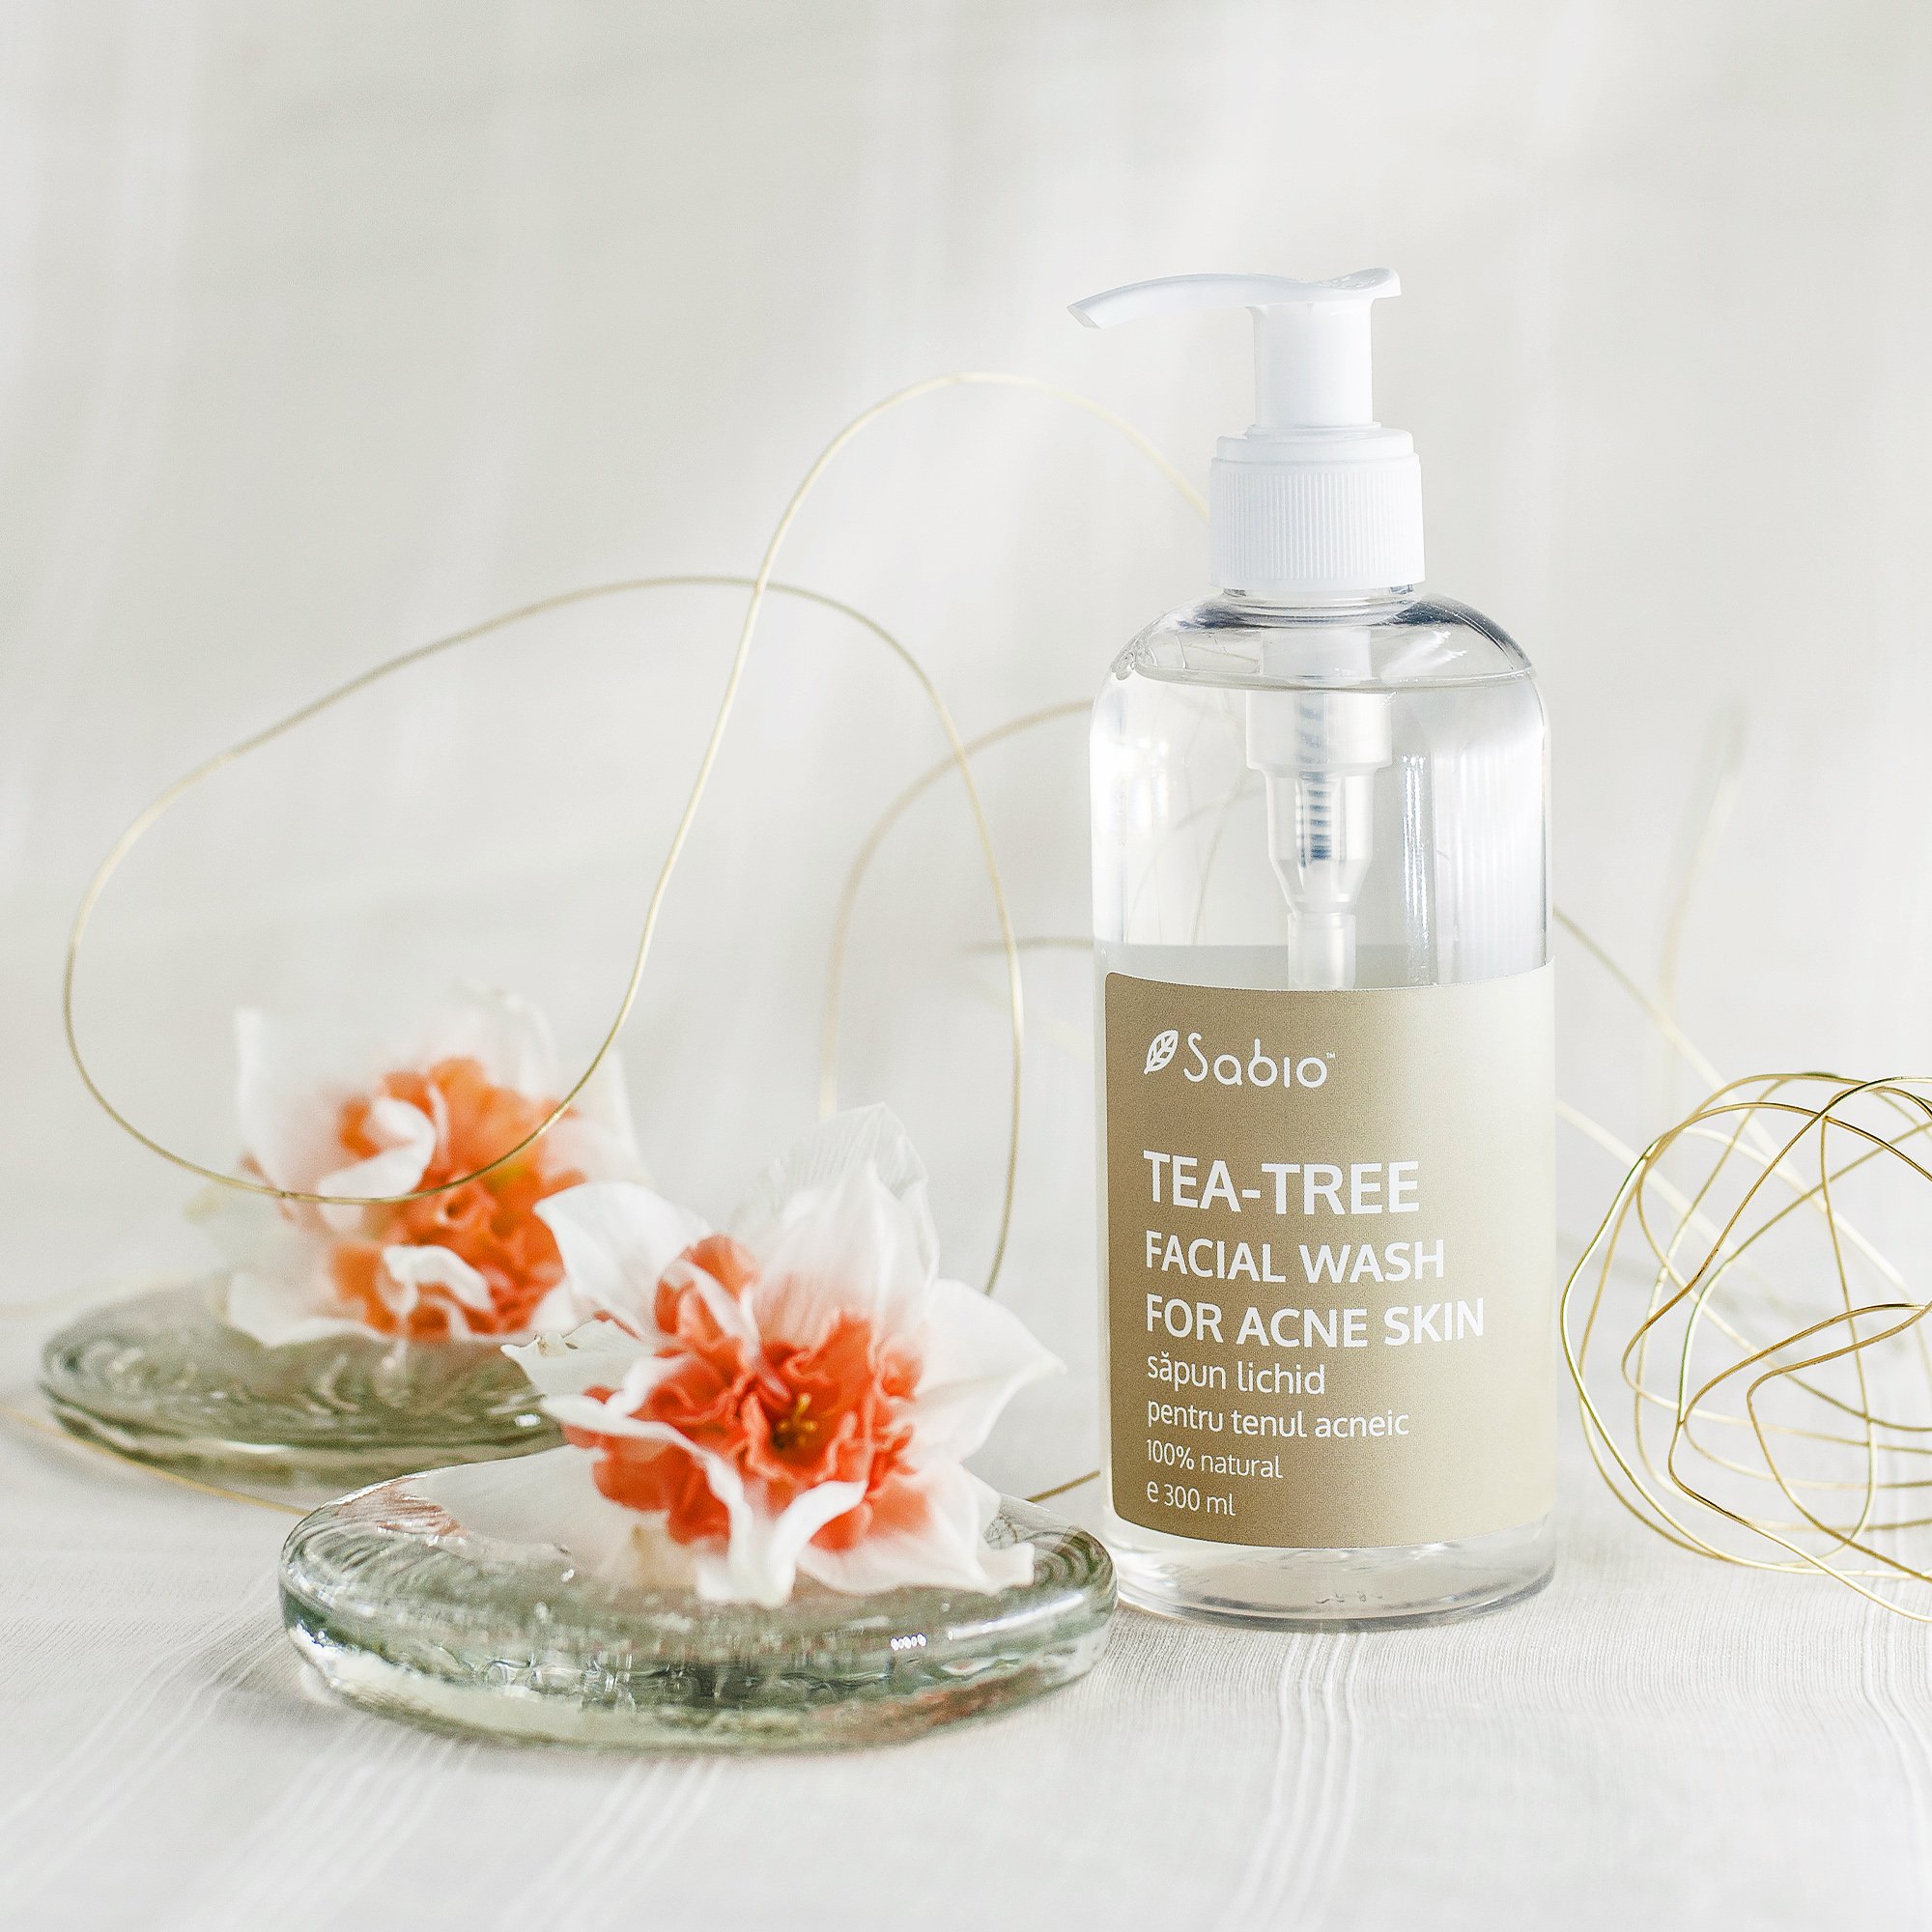 Facial liquid soap with tea-tree for acne prone skin